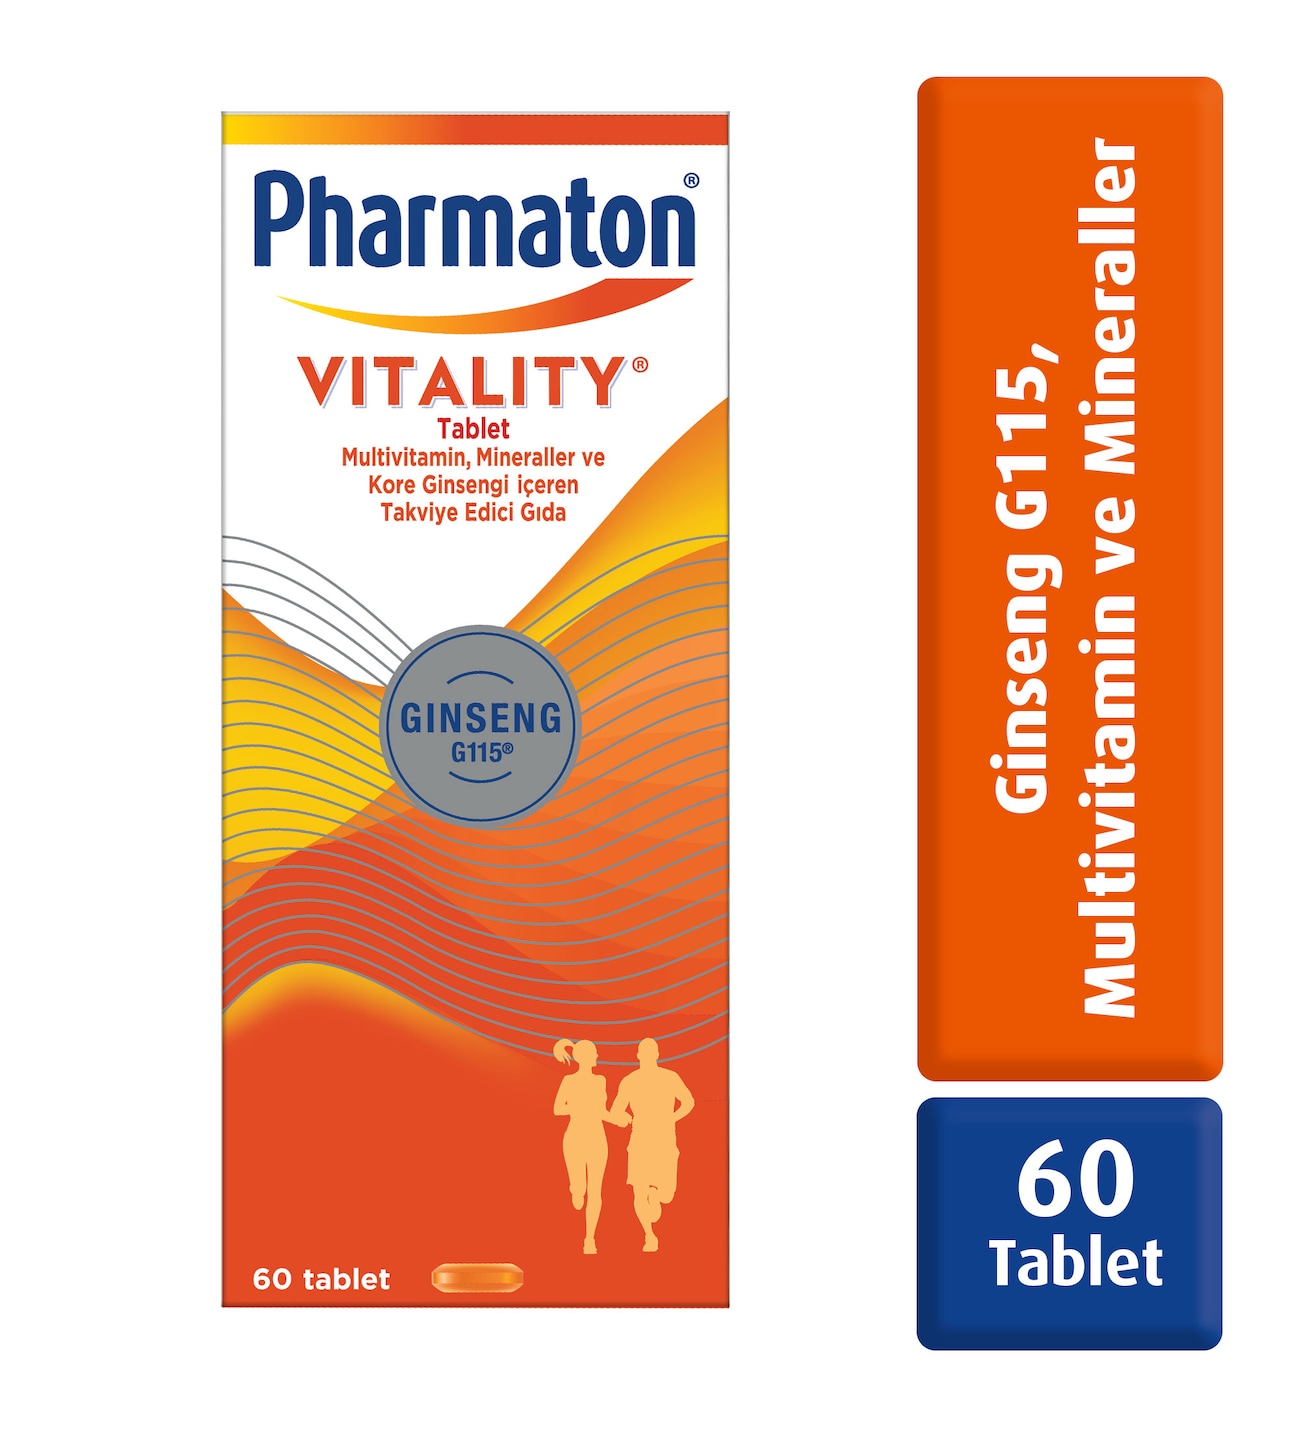 Pharmaton Vitality 60 Kapsül - Ginseng G115, Multivitamin ve Mineraller